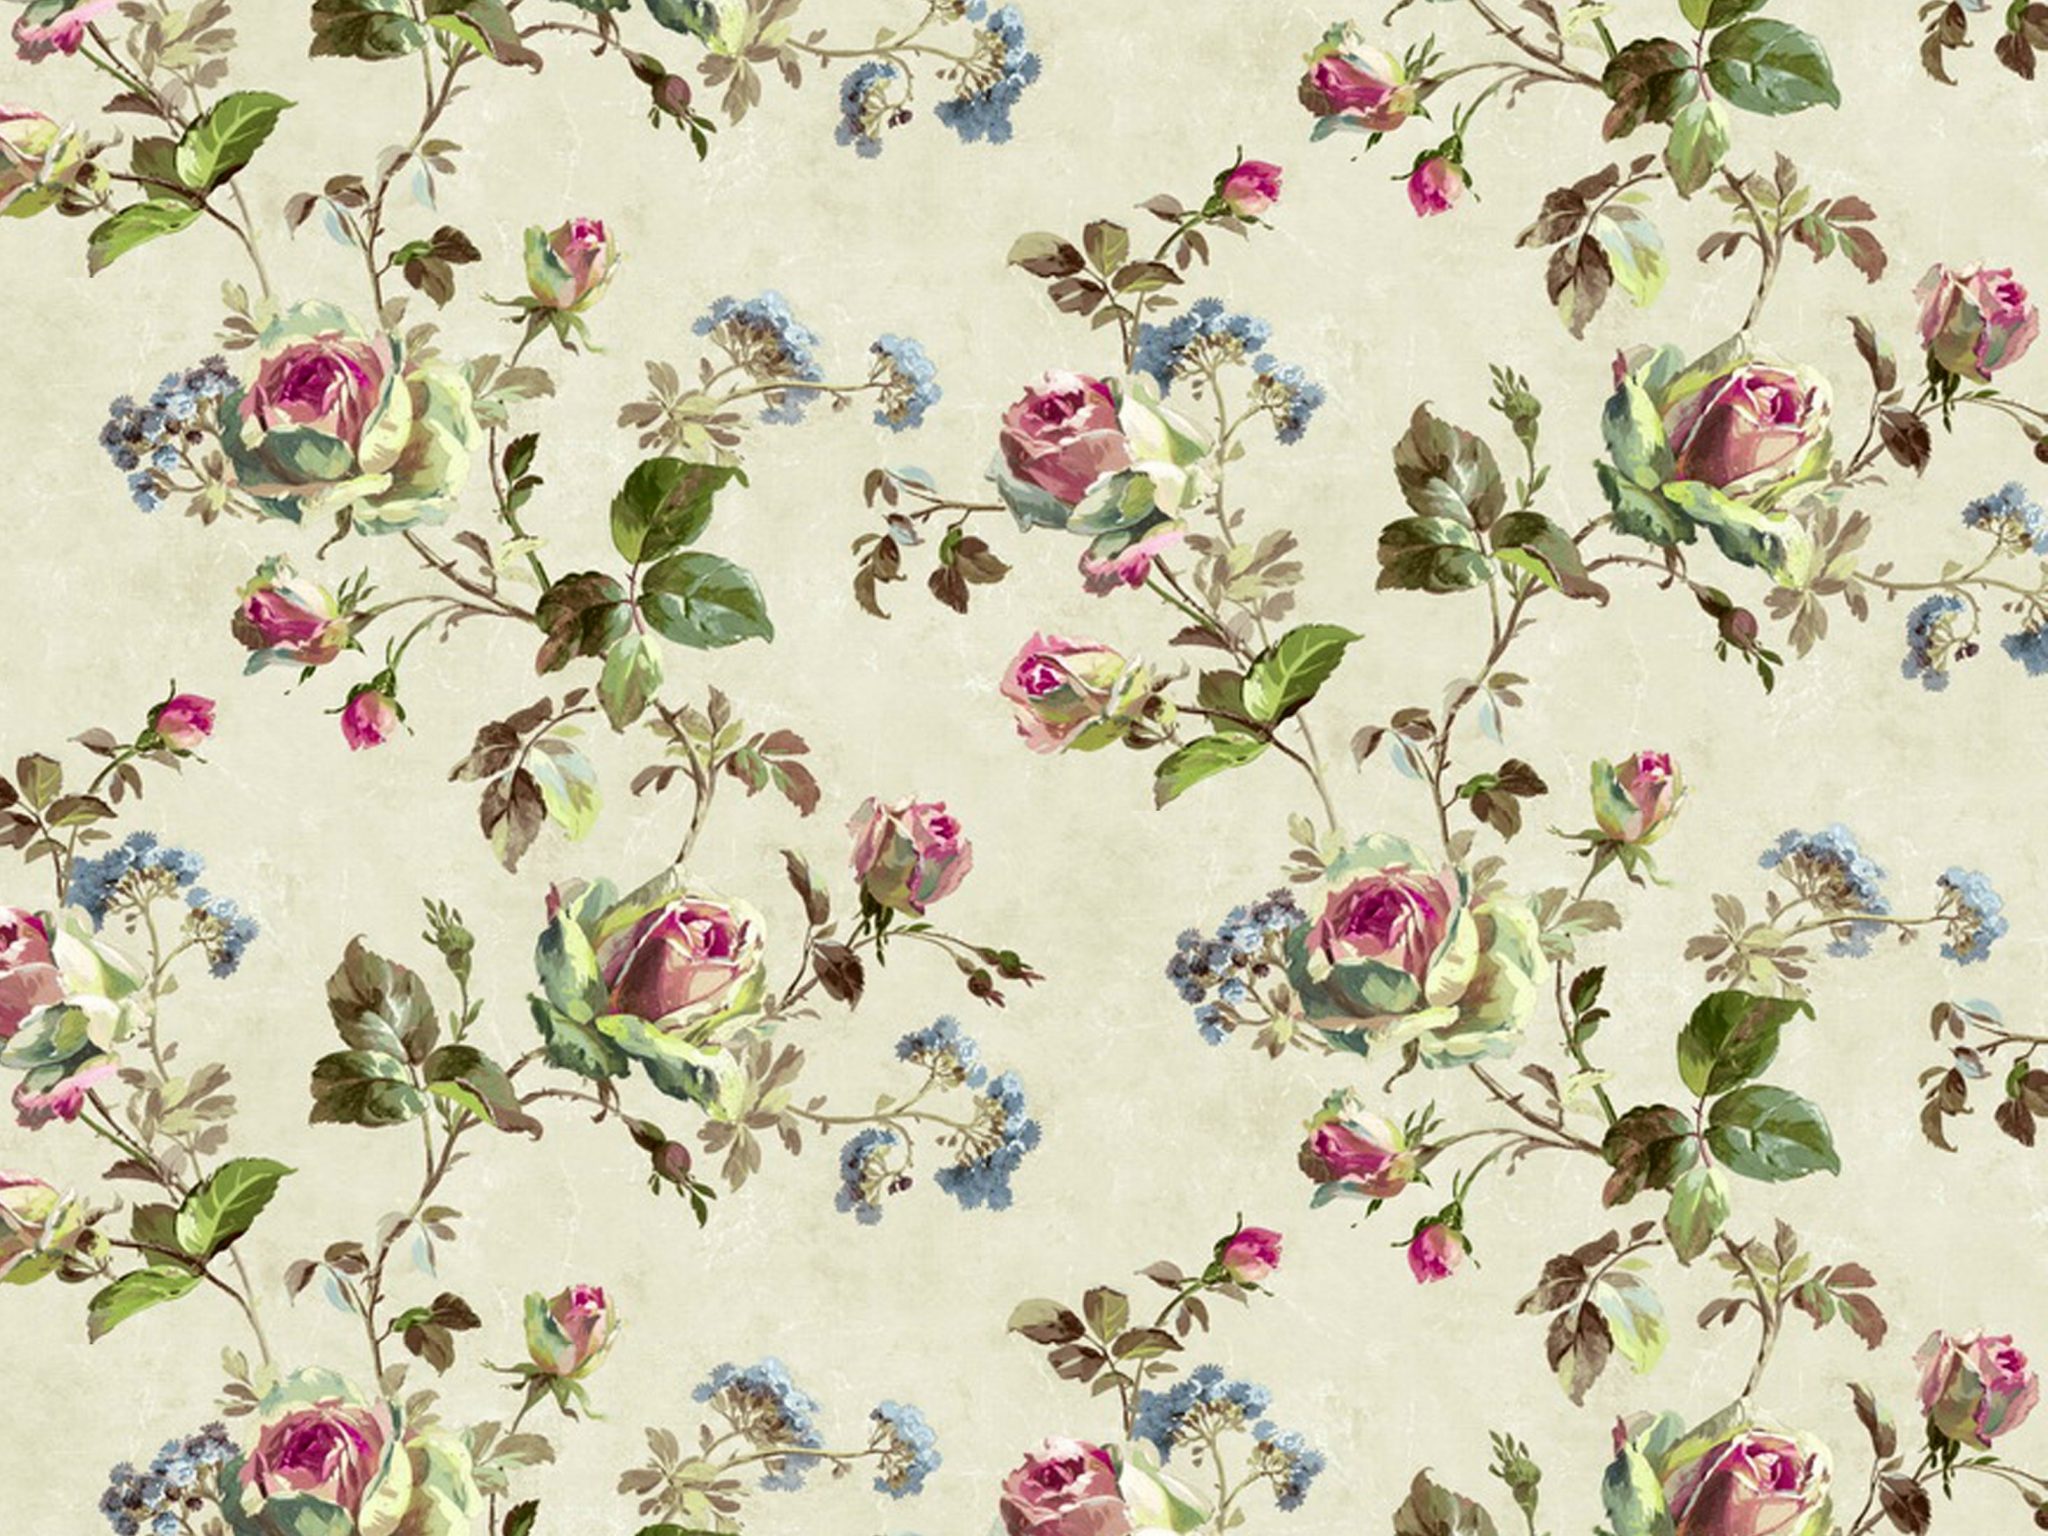 2048x1536 wallpaper Aesthetic Paper Colorful Flowers Paint iPad Wallpaper 2048x1536 pixels resolution